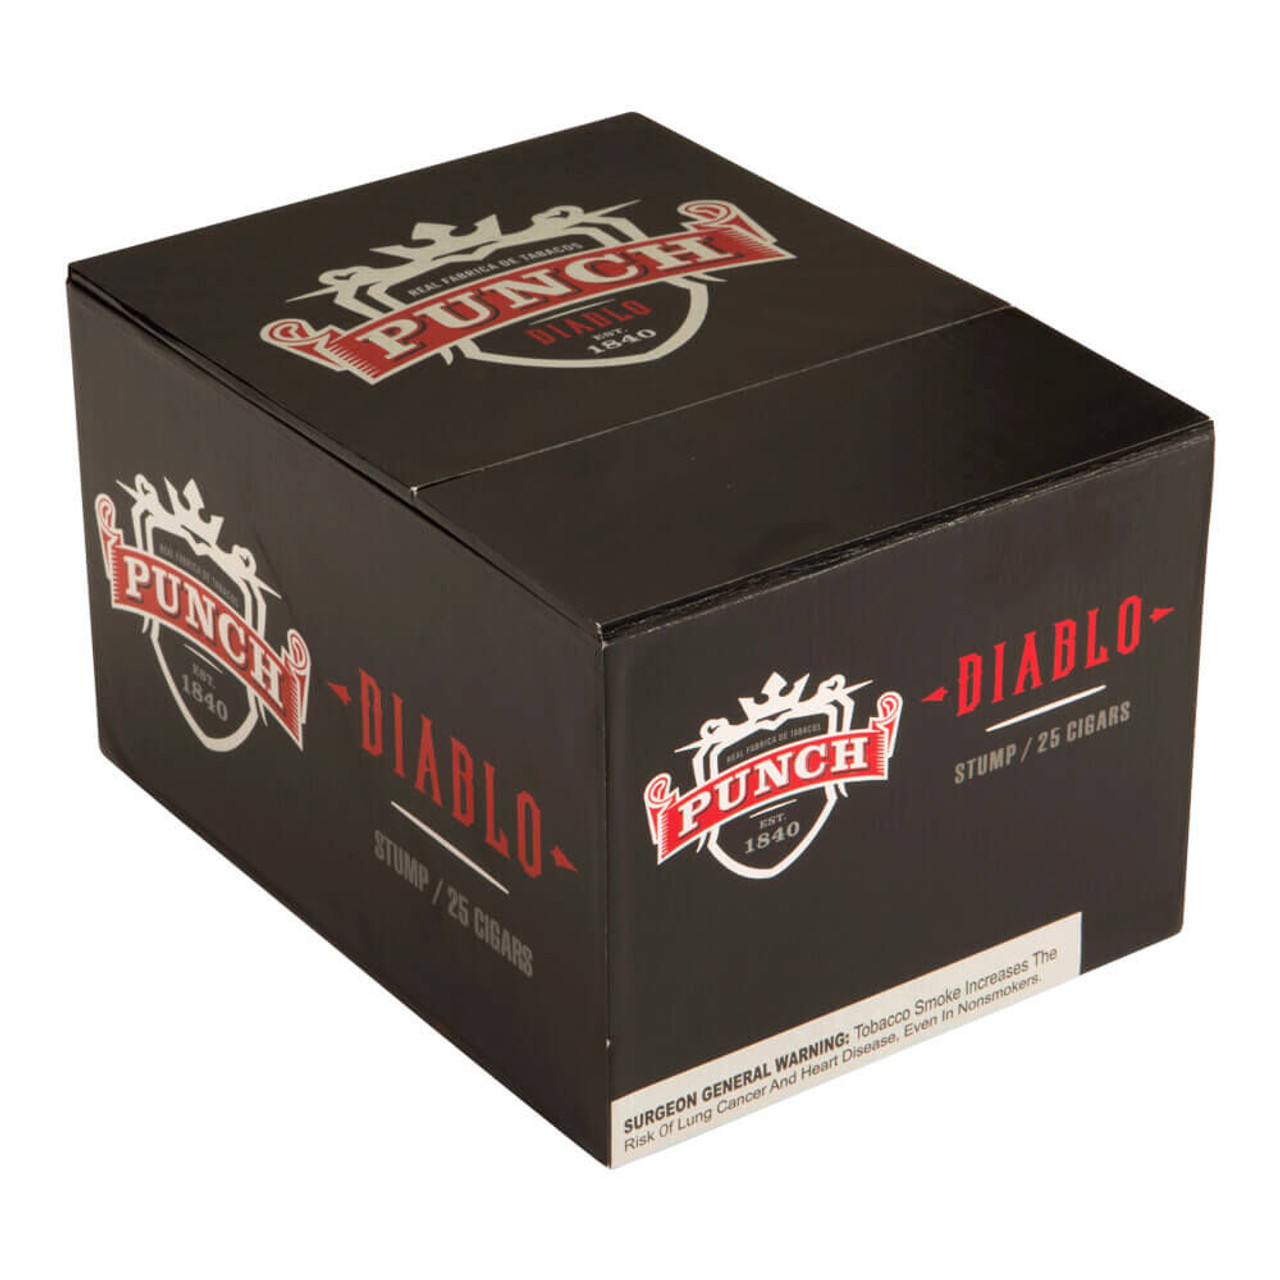 Punch Diablo Stump Cigars - 4.5 x 60 (Box of 25) *Box